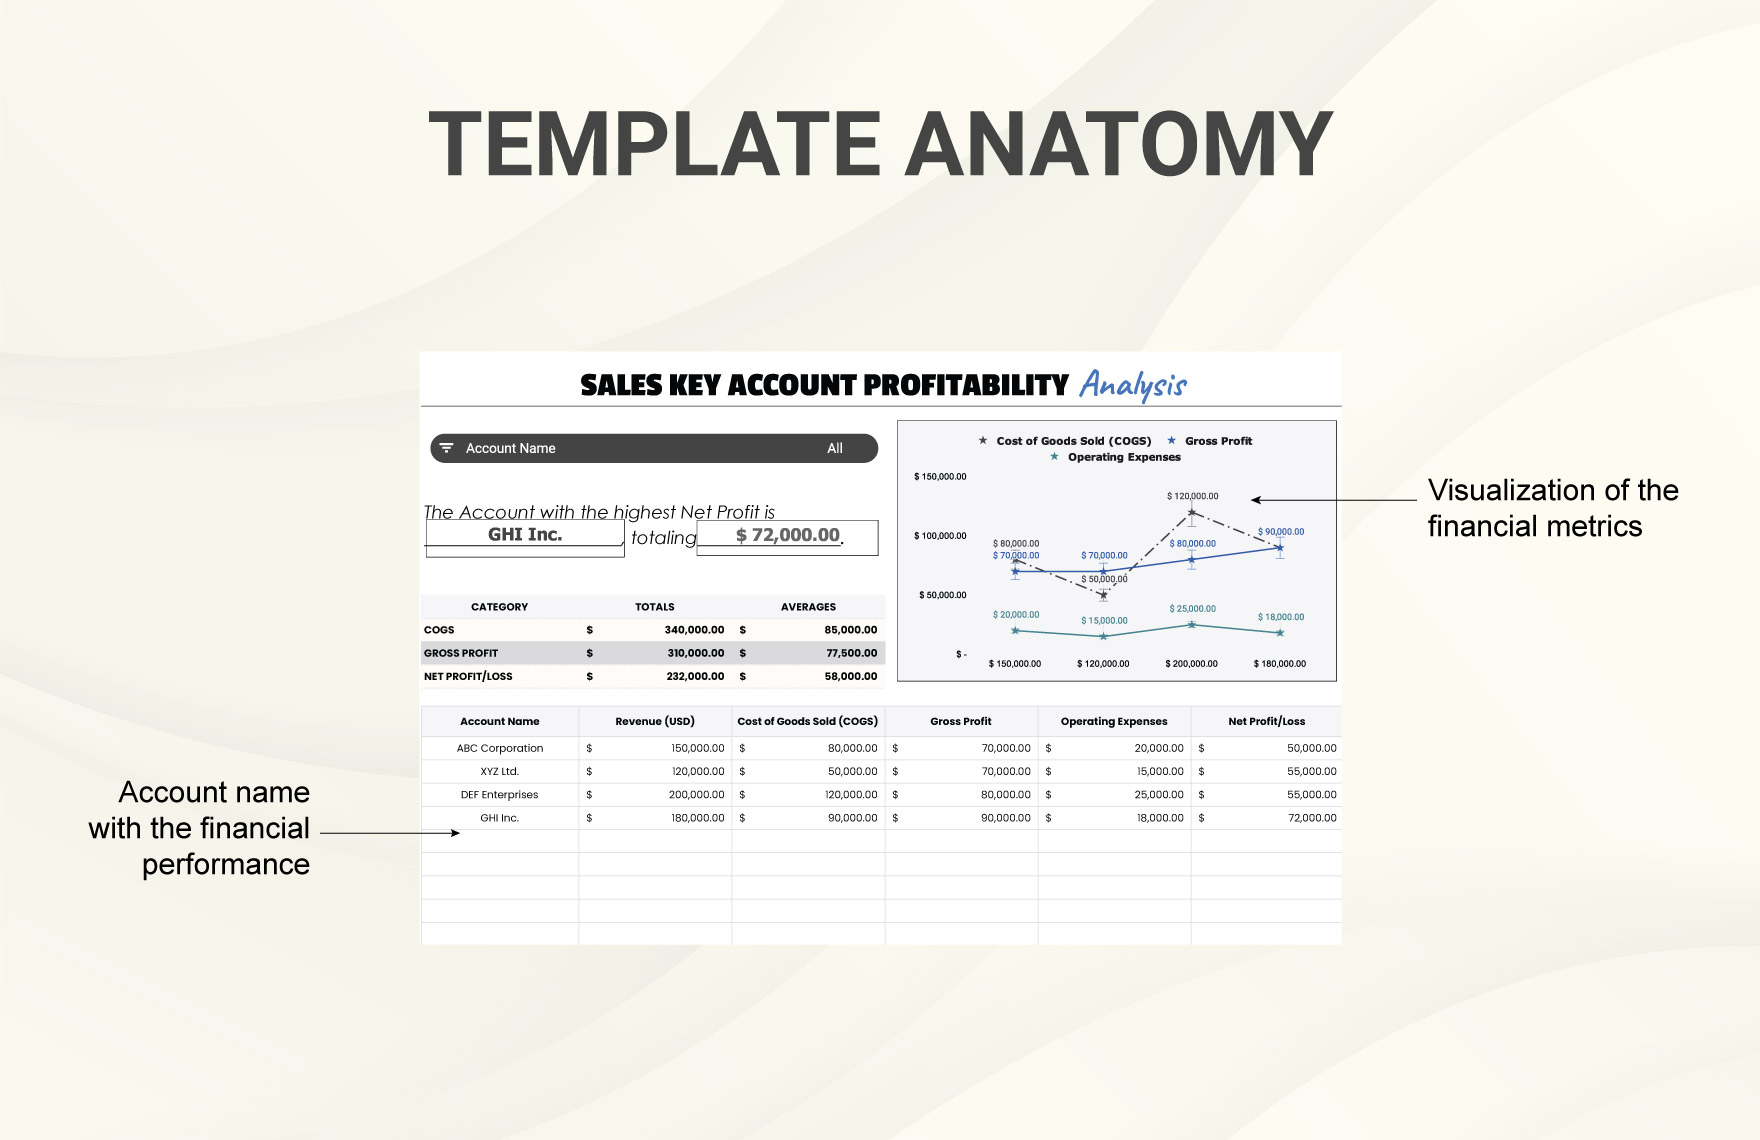 Sales Key Account Profitability Analysis Template